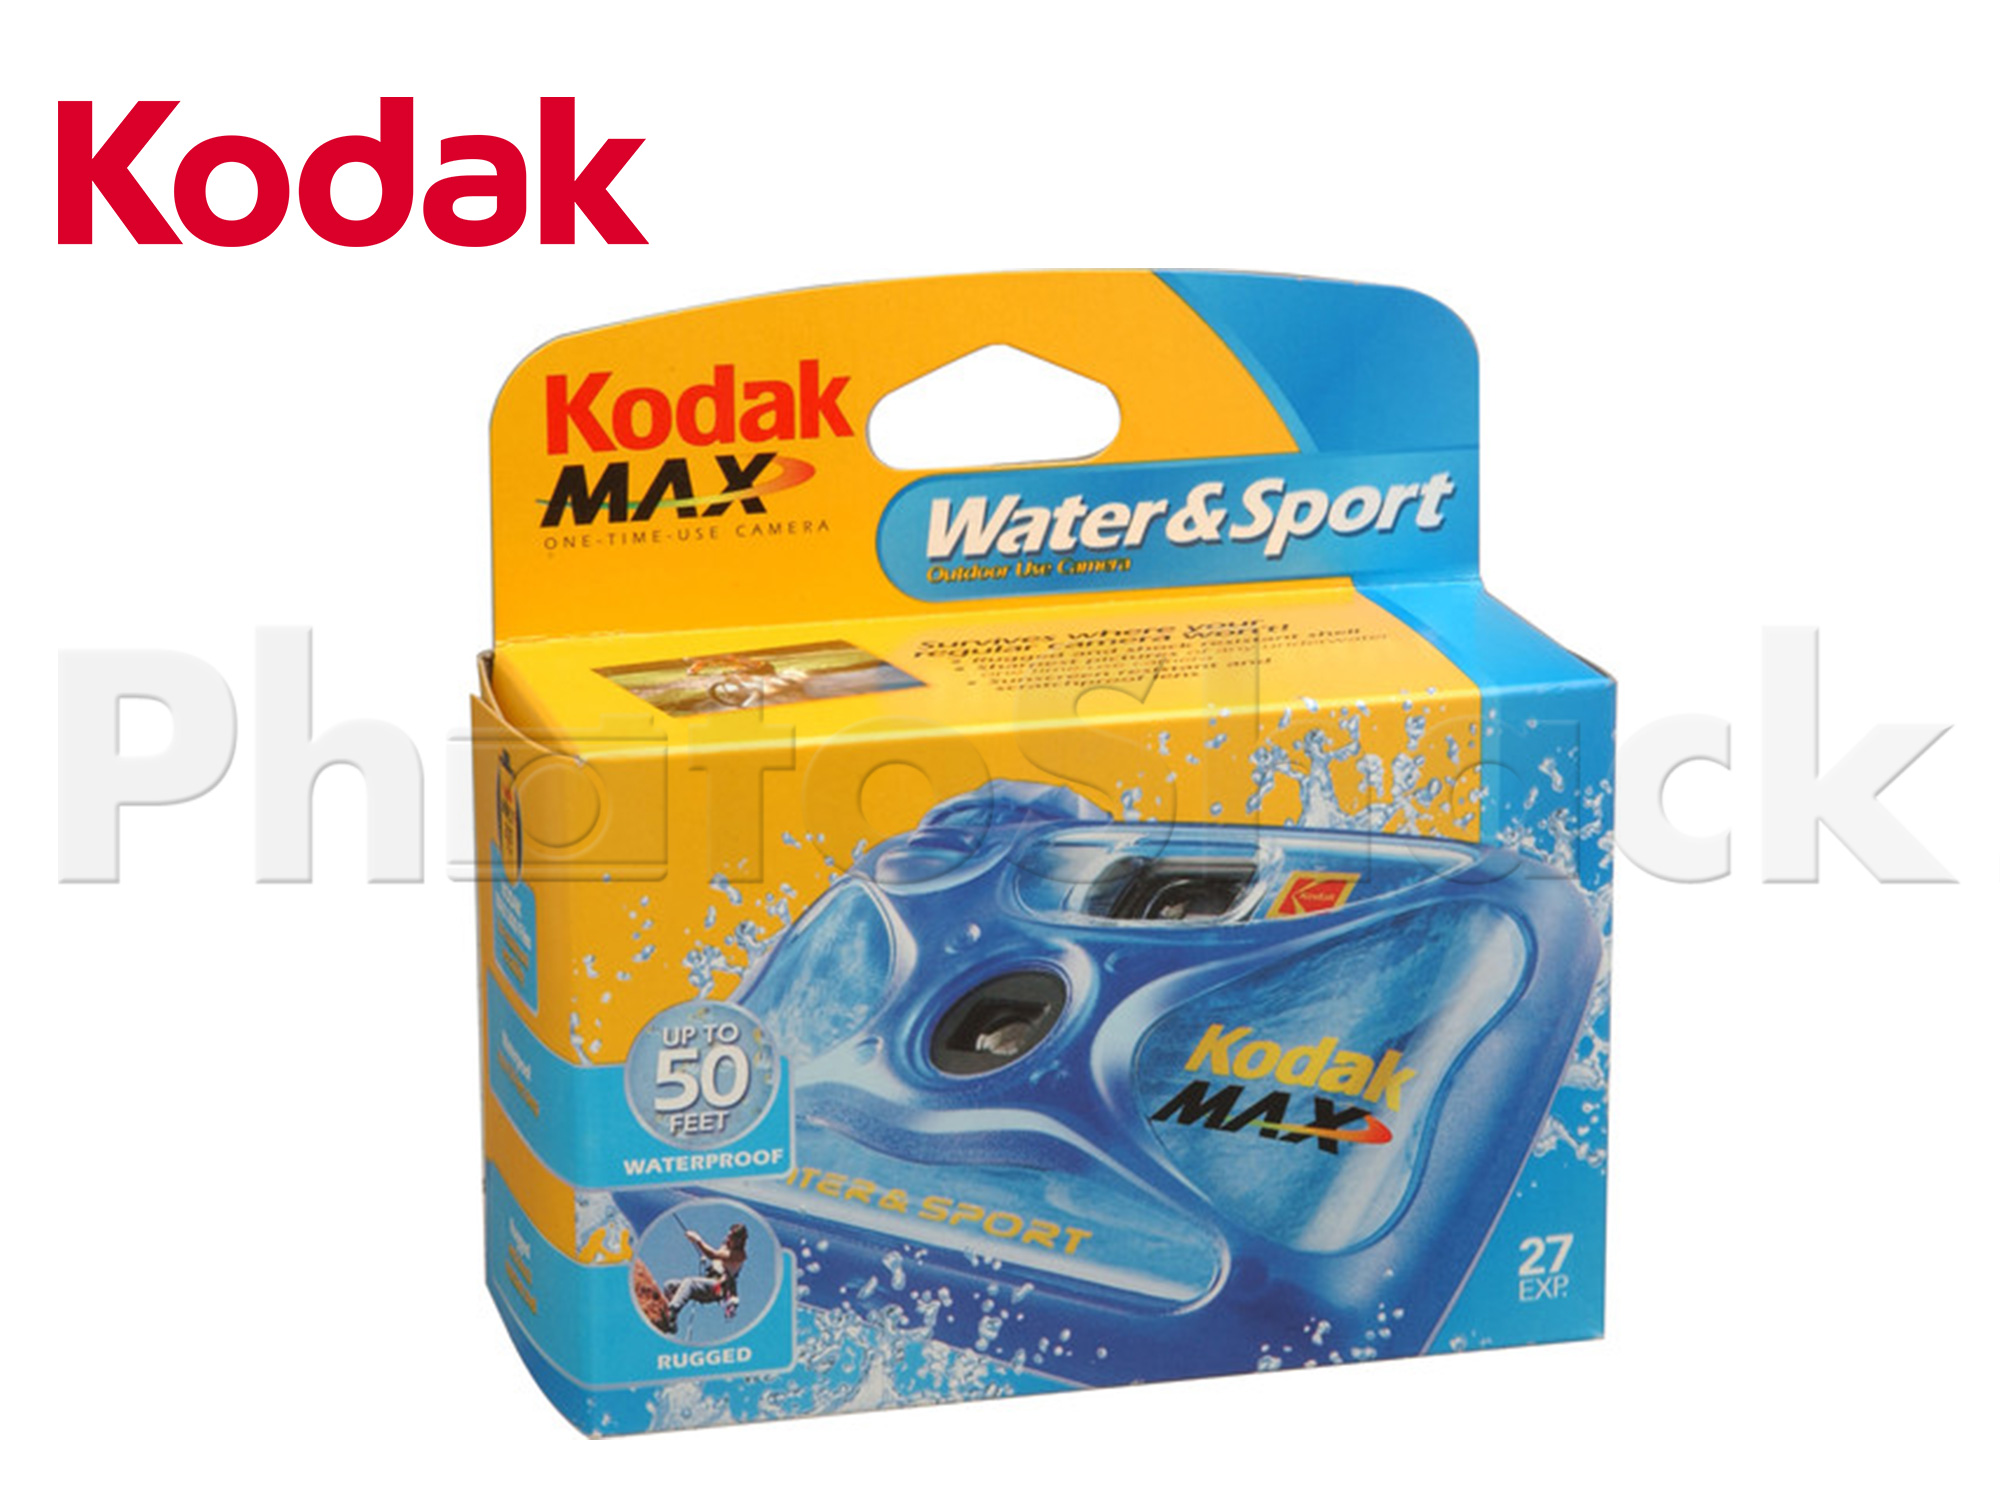 Kodak Water & Sport Waterproof One-Time-Use Disposable Camera